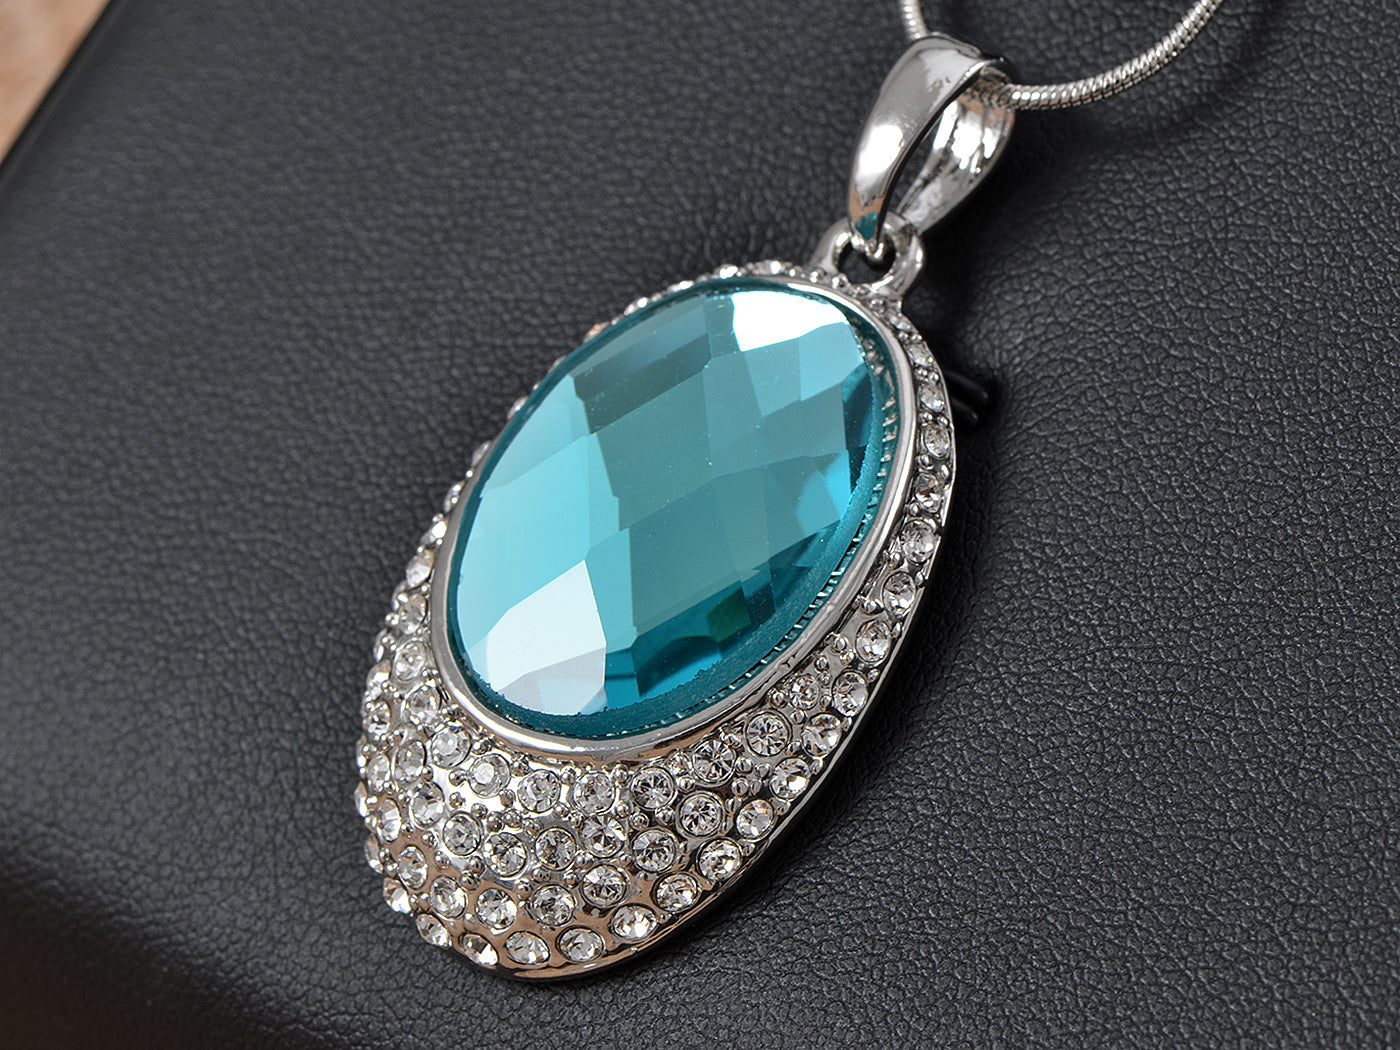 Swarovski Crystal Oval Shaped Turquoise Pendant Embedded Necklace